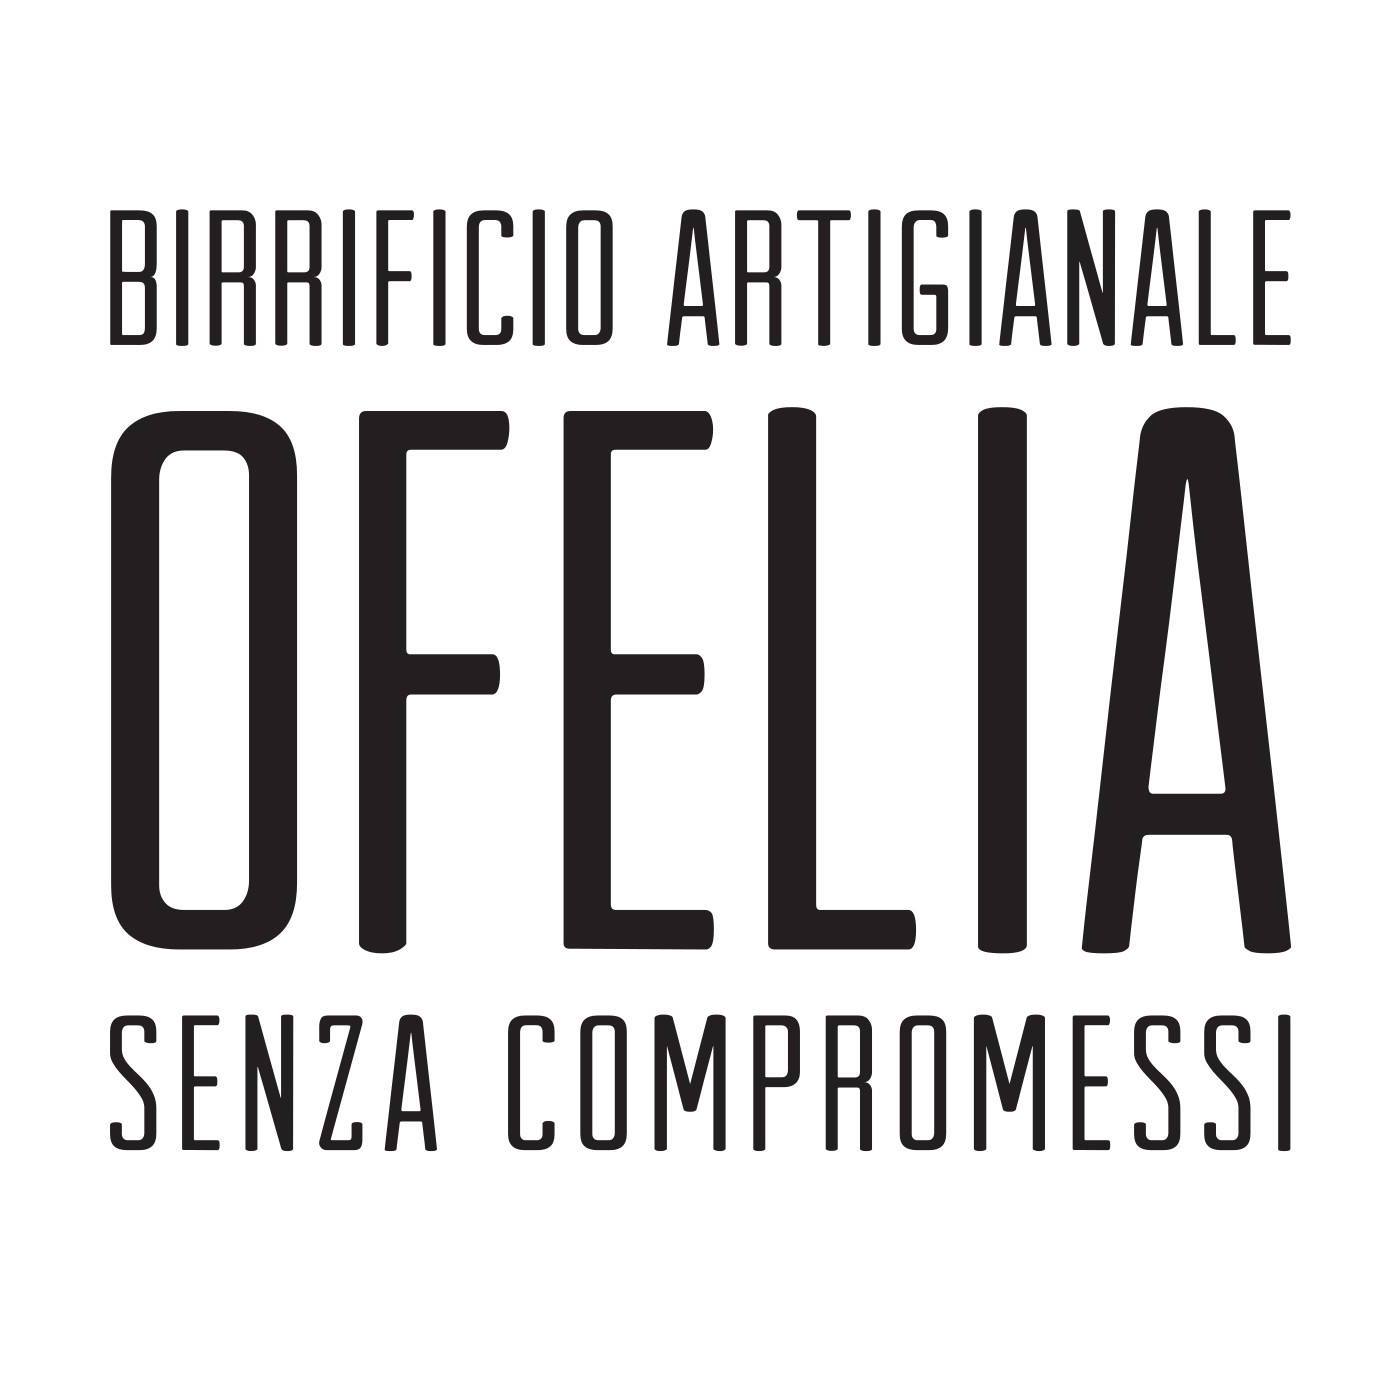 Logo produttore Birrificio Ofelia